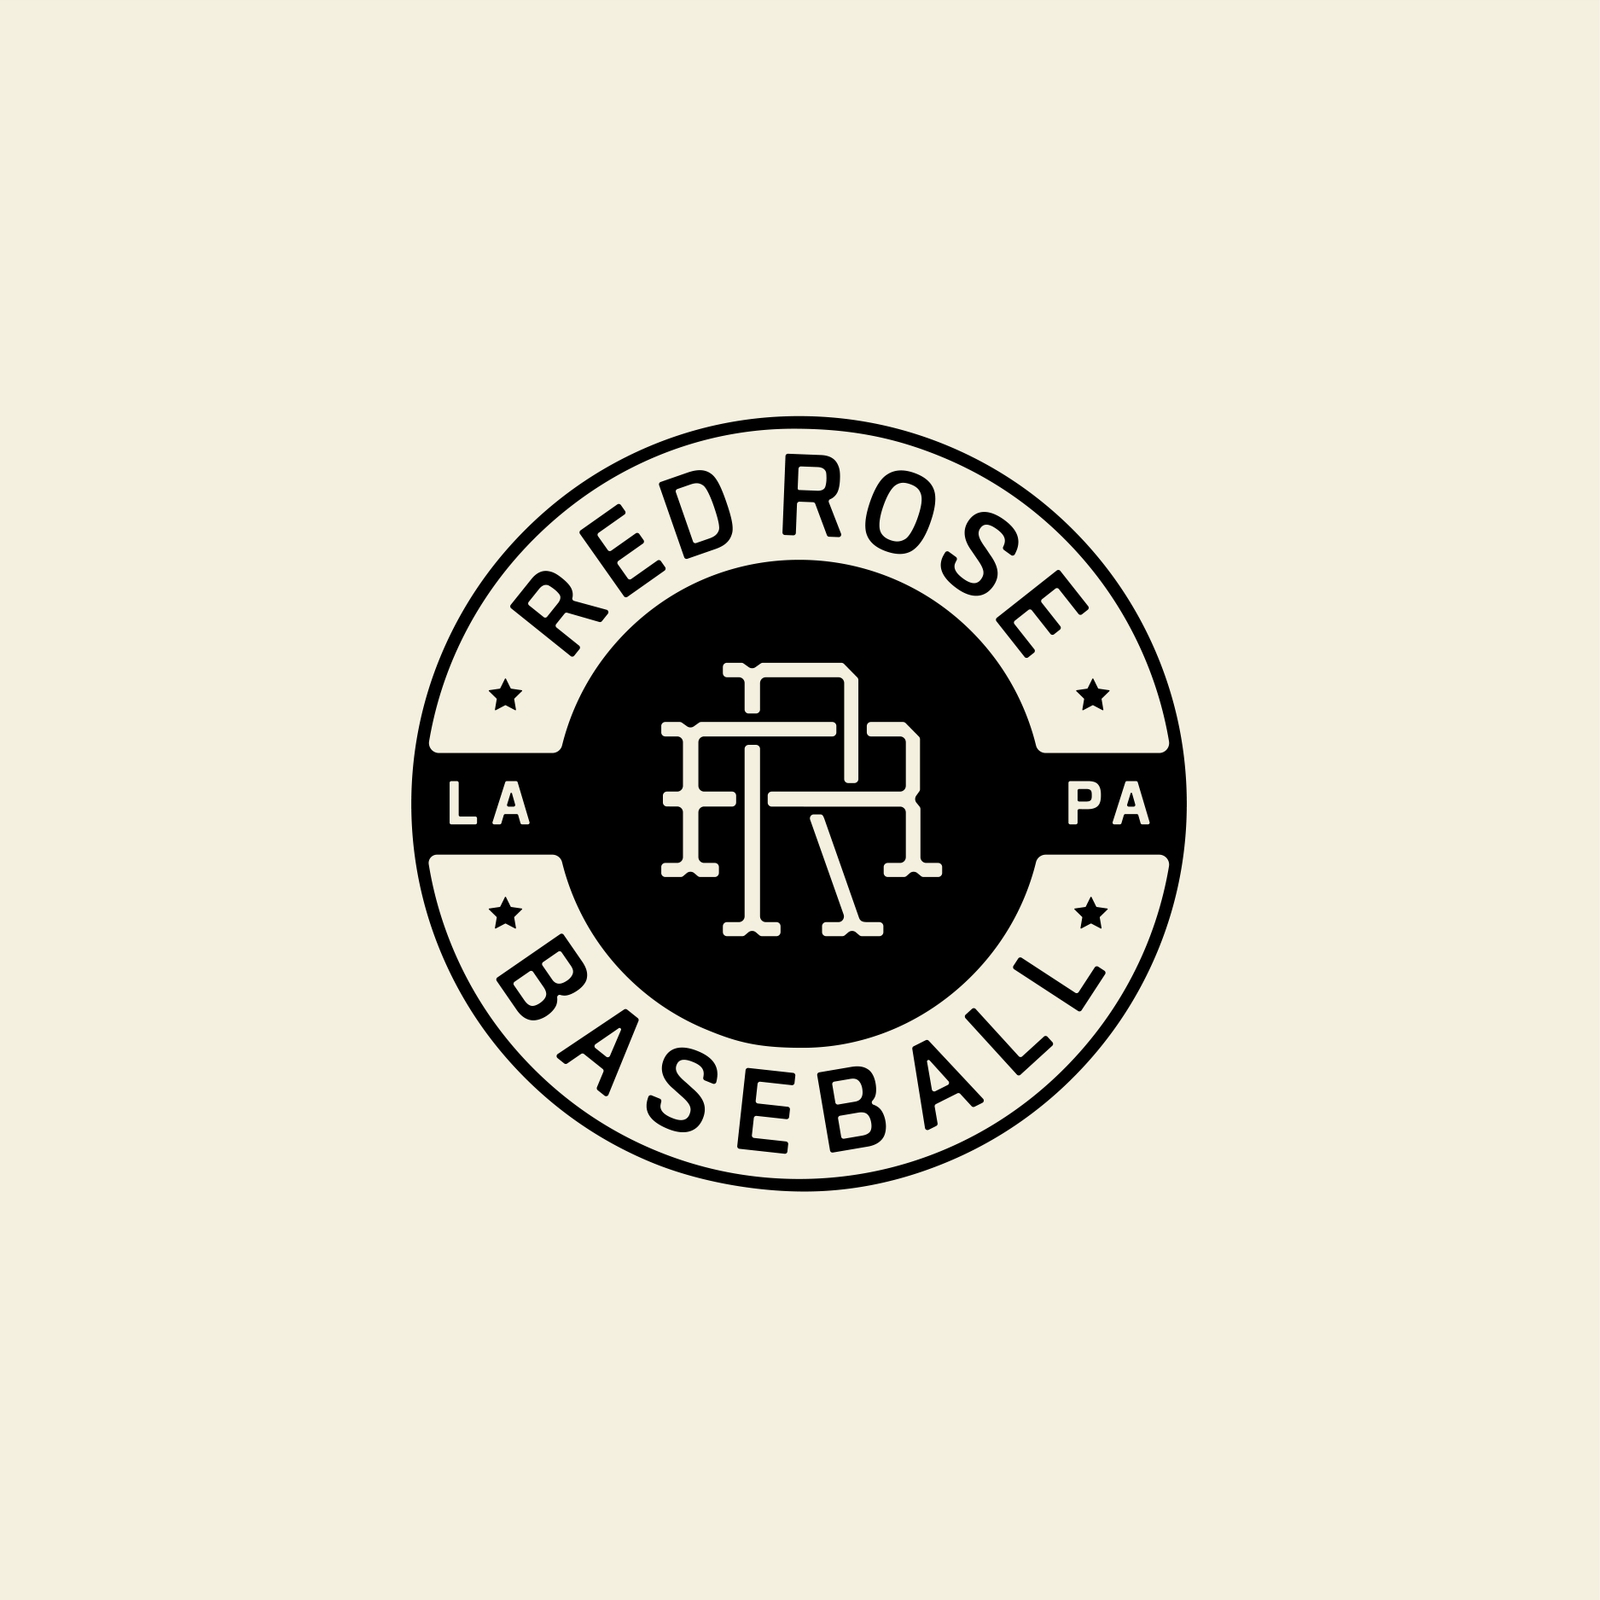 Red Rose Baseball Club logo